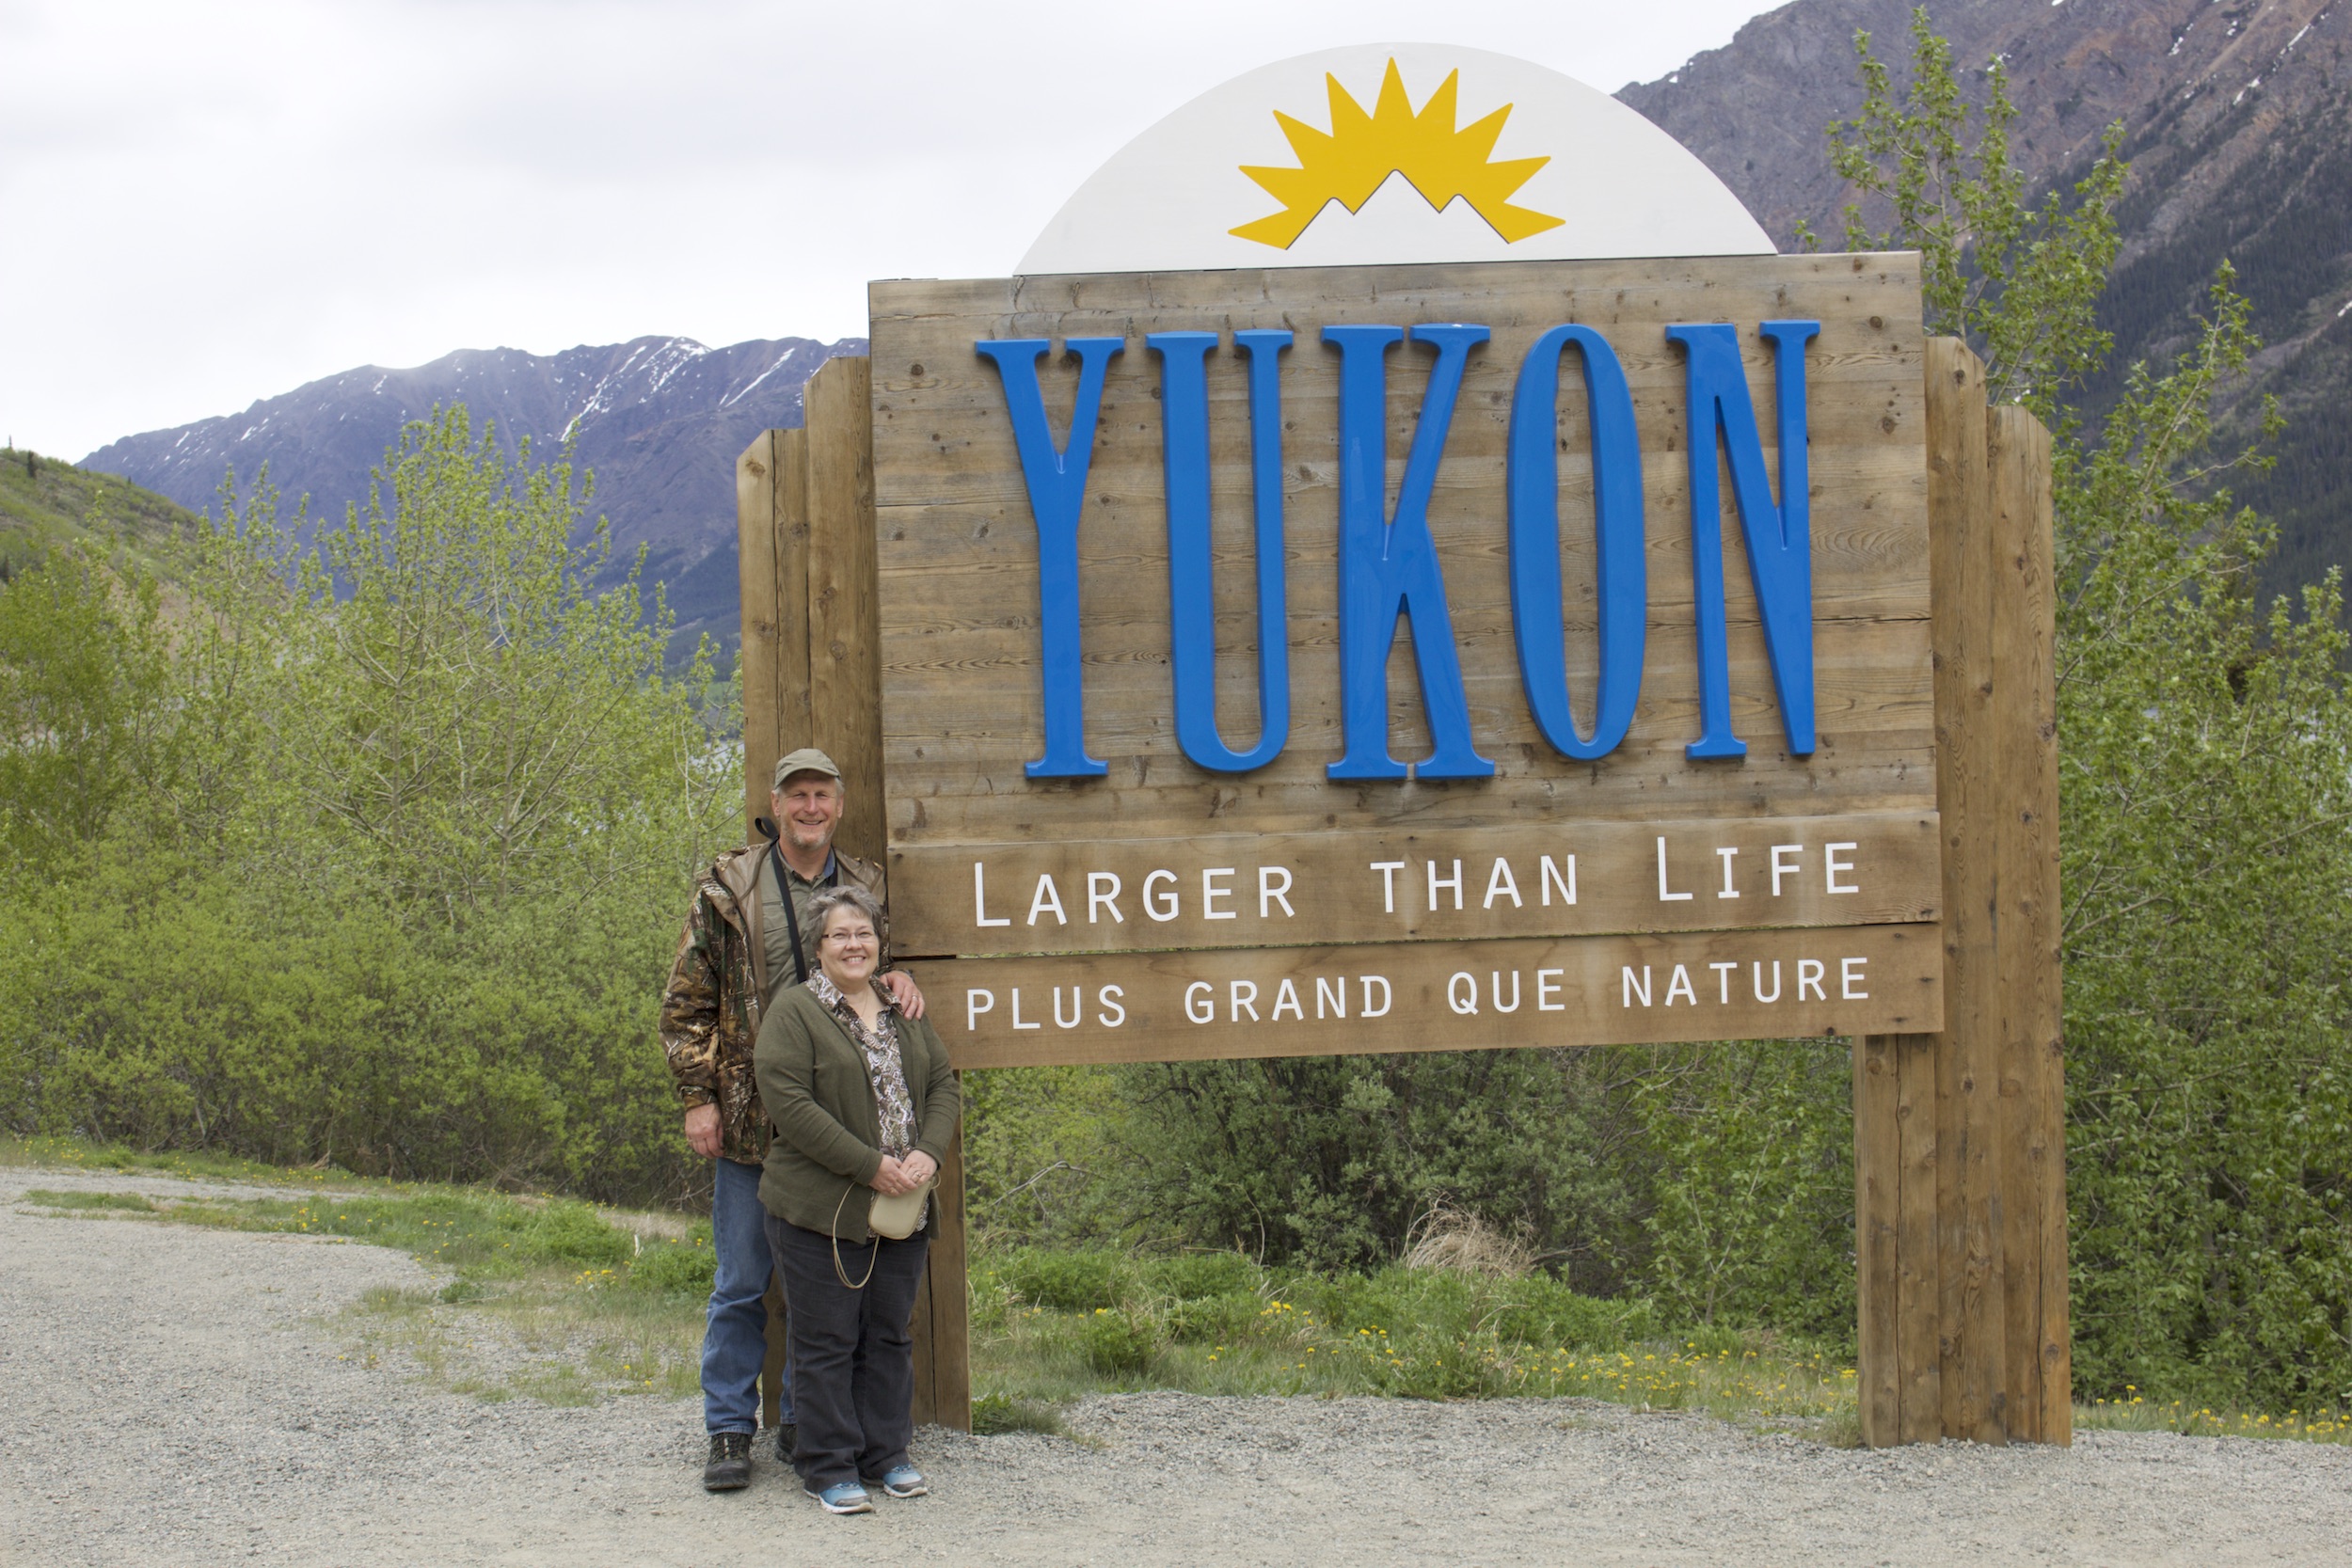 From Skagway, Alaska, trekking into the Yukon Territory of Canada.